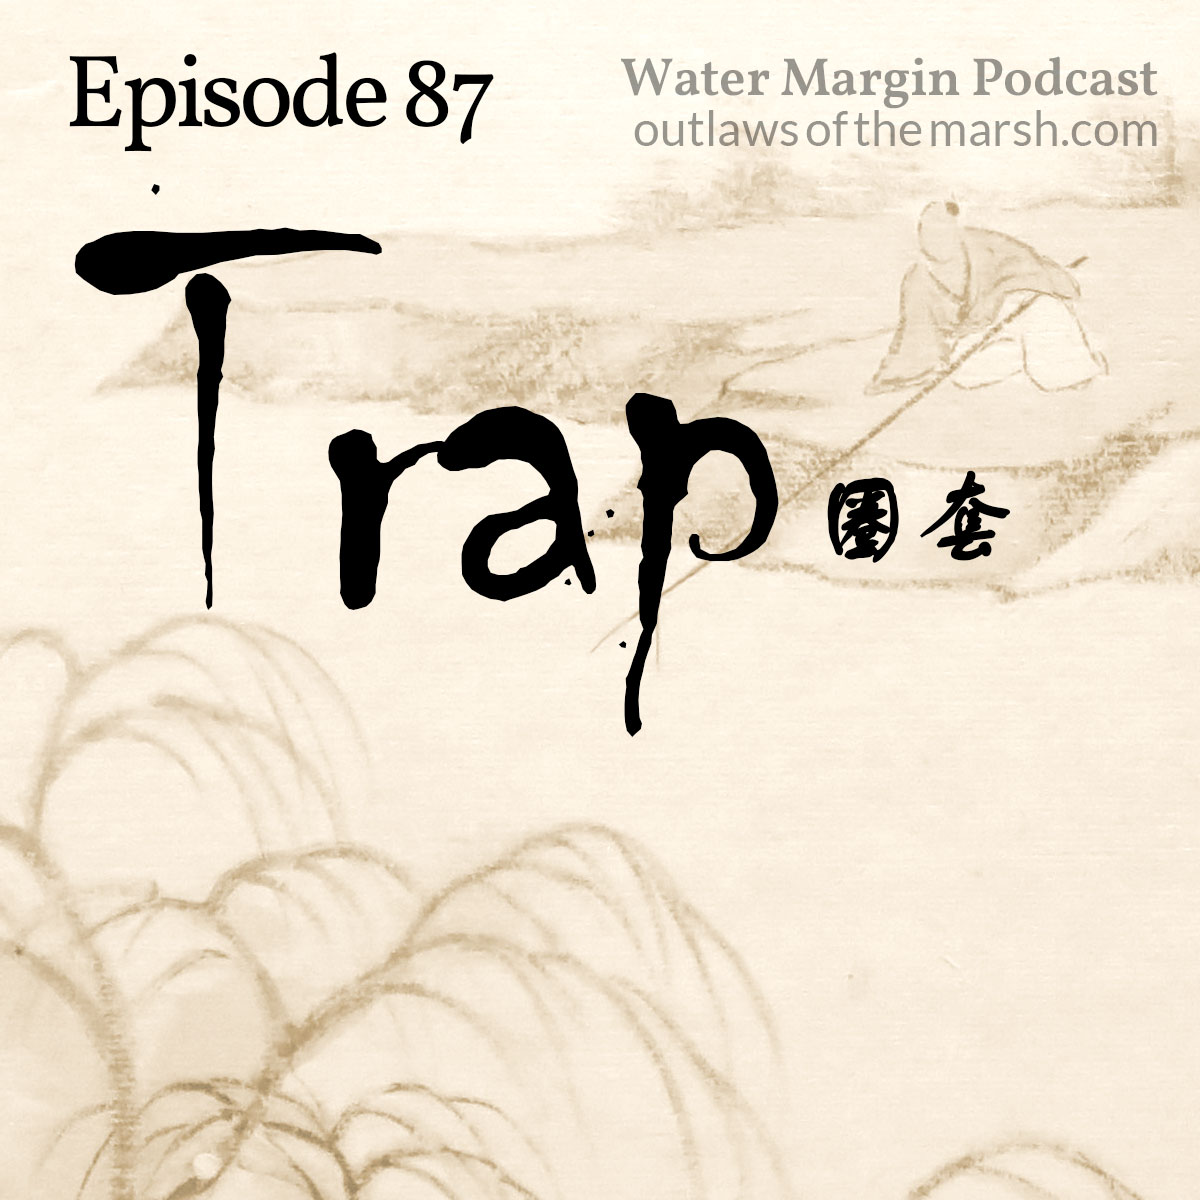 Water Margin Podcast: Episode 087